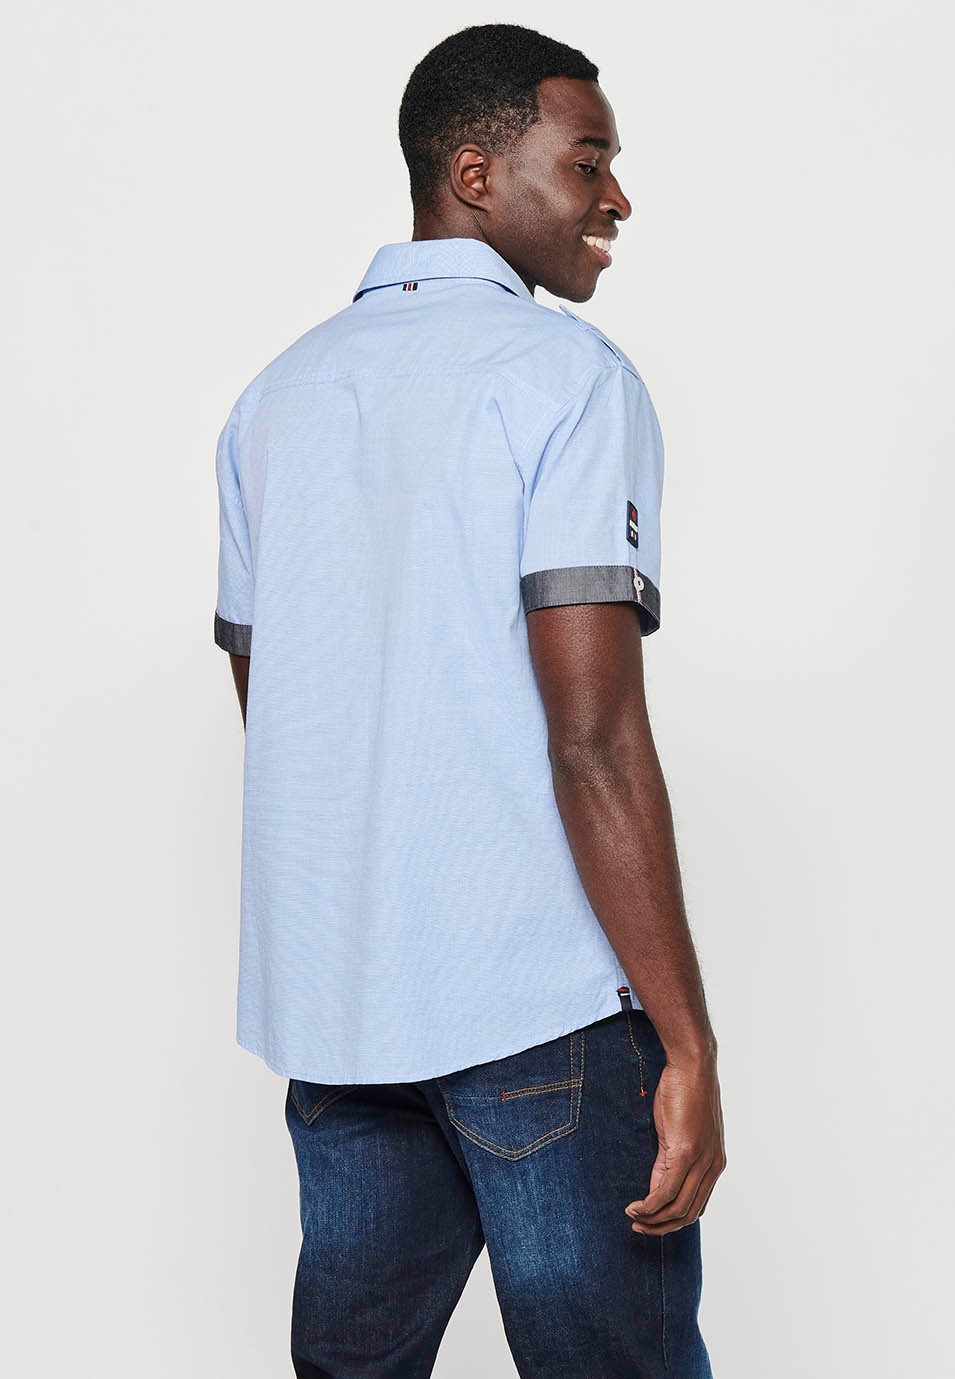 Camisa de algodon, manga corta, detalles hombro, color azul para hombre 5